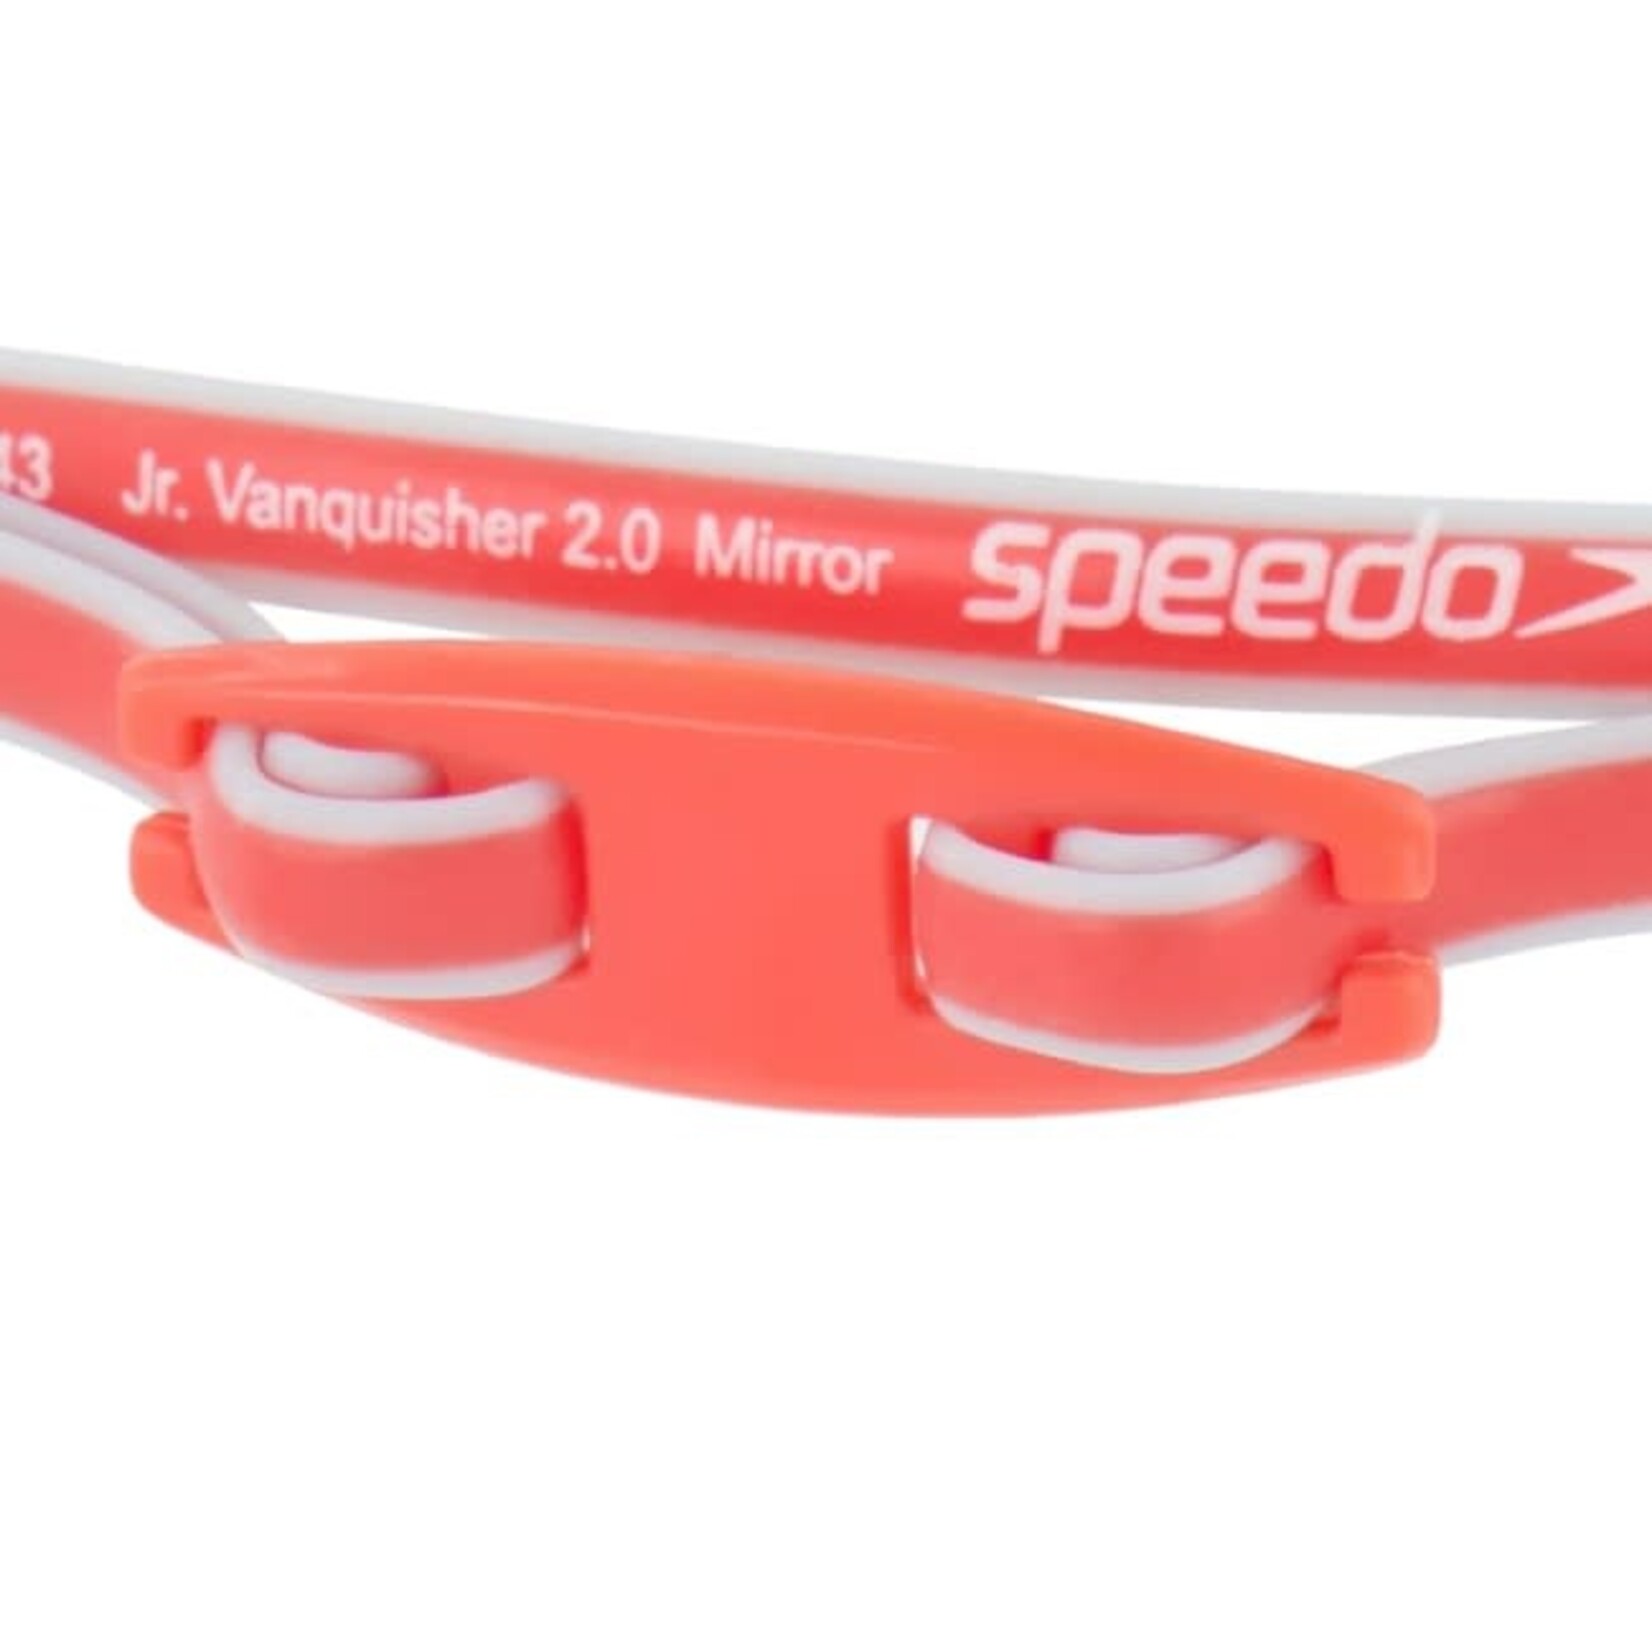 Speedo Jr. Vanquisher 2.0 Mirrored